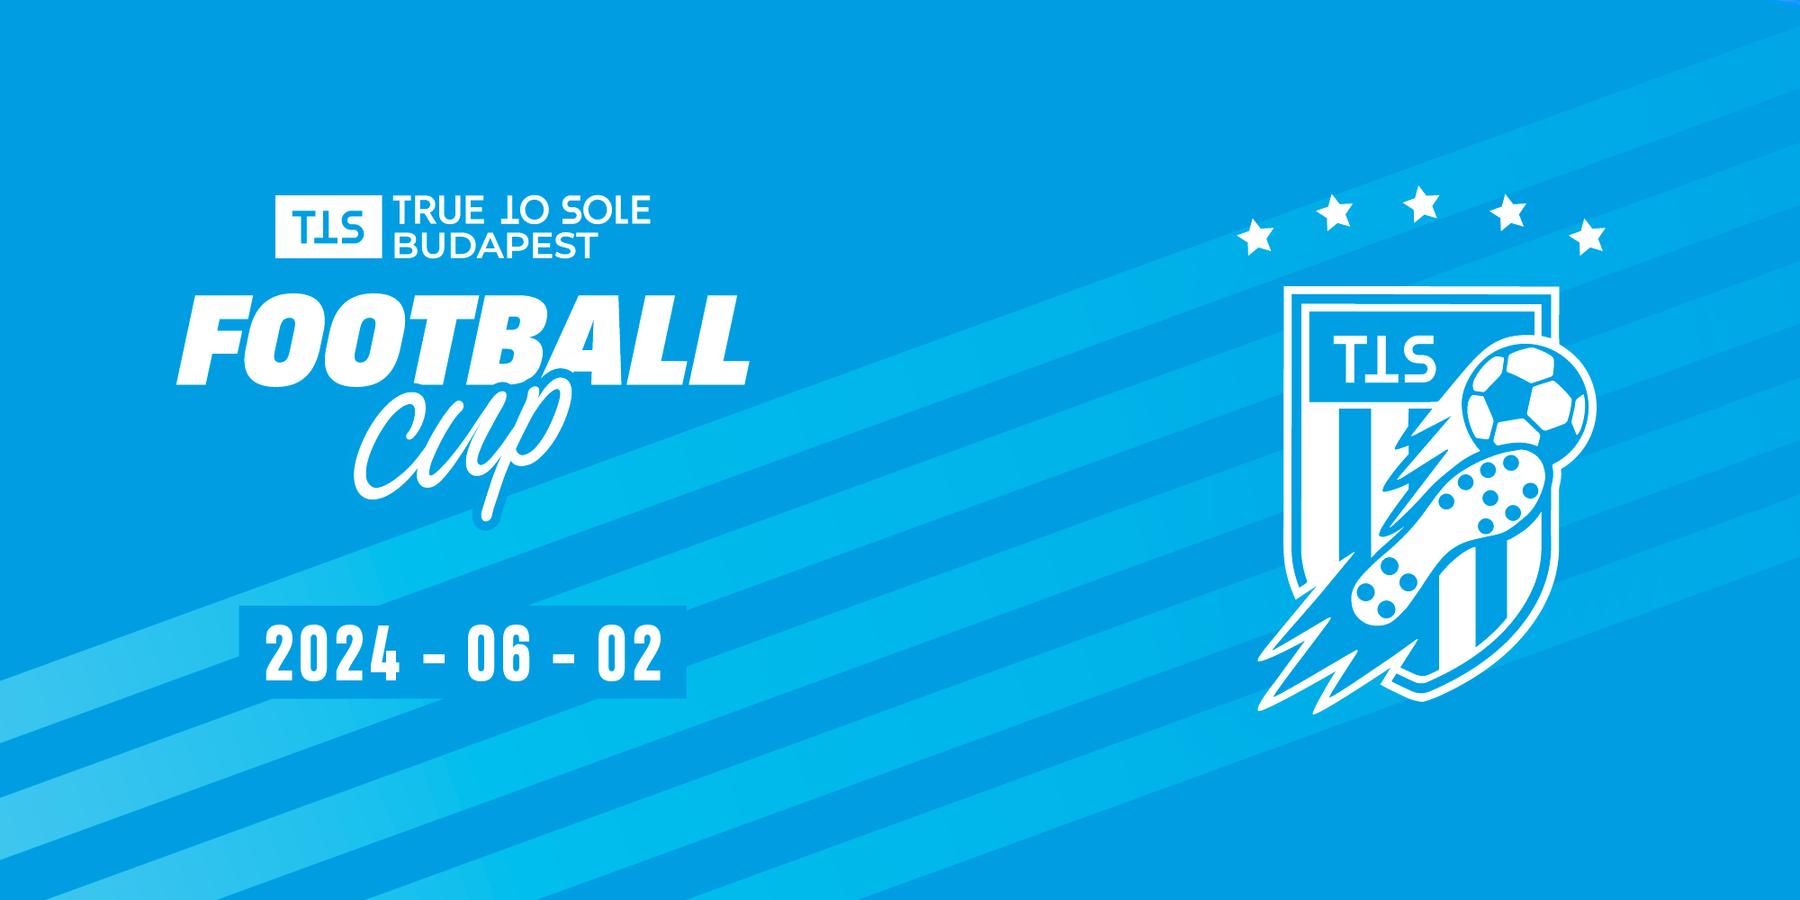 Június 2-án a TTS Budapest Football Cup-on droppolnak a True to Sole focimezek!